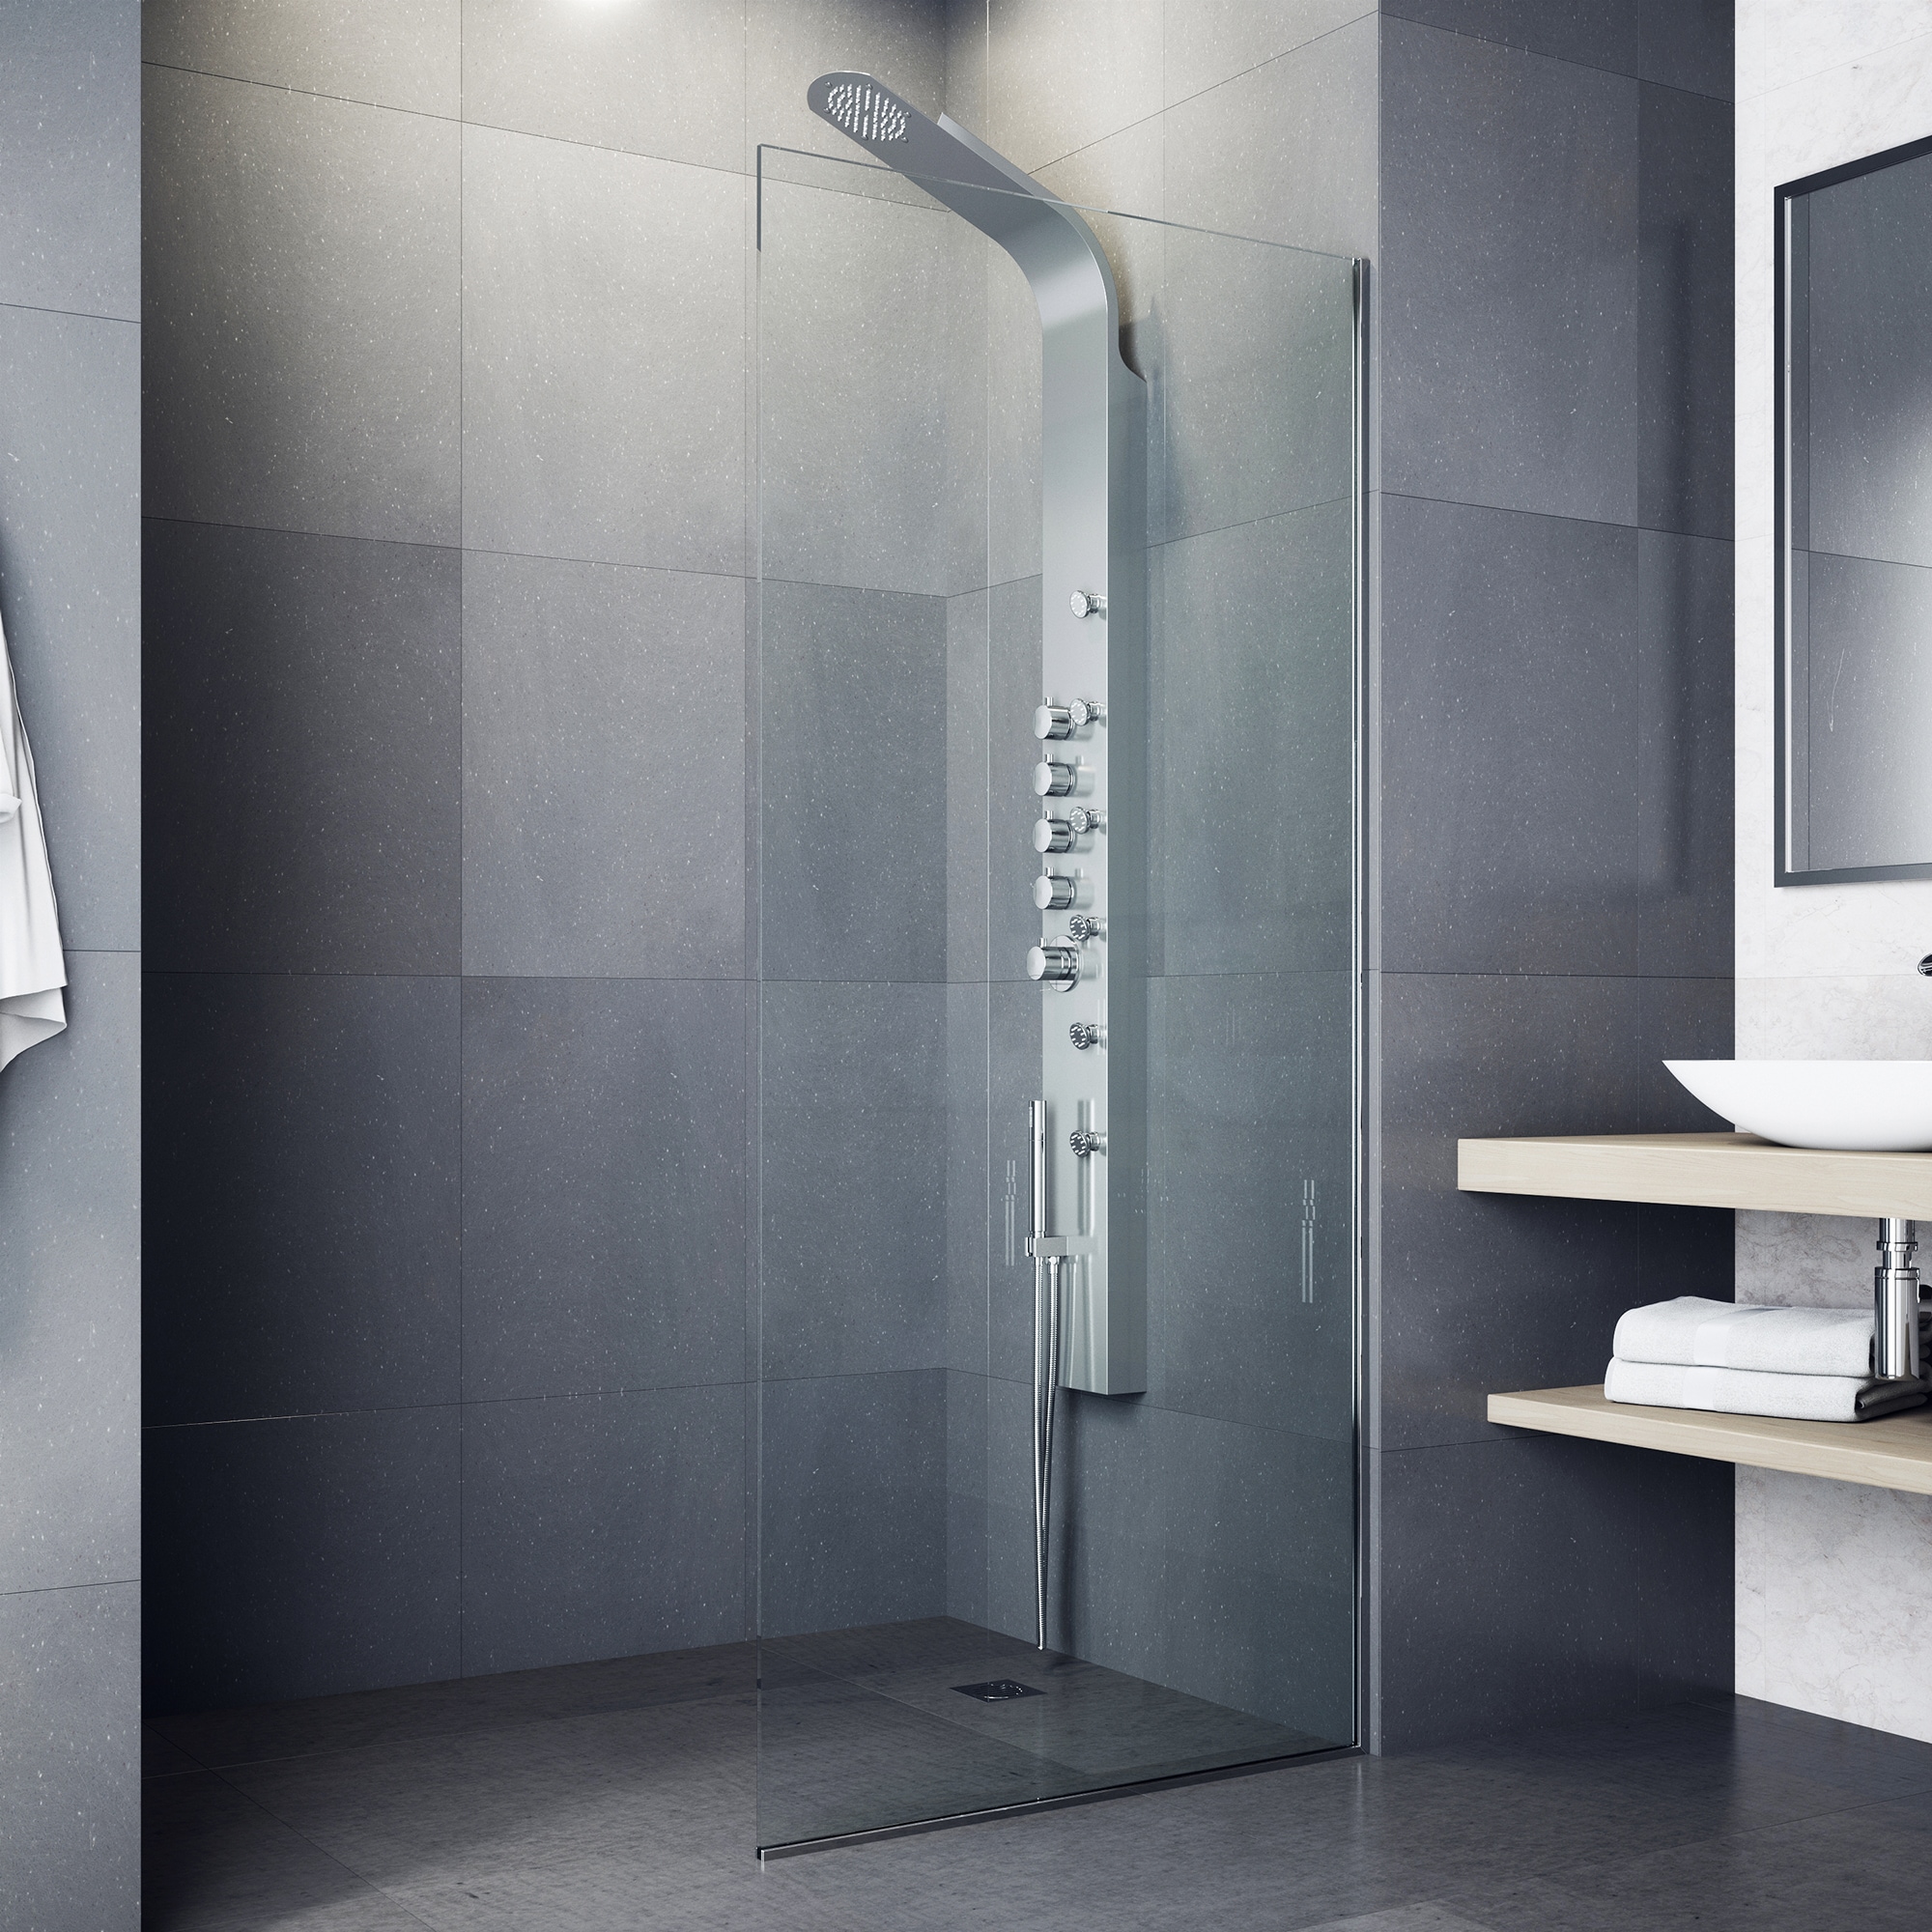 Dracelo Grey Sturdy Tubing Structure Bathroom Hanging Shower Head